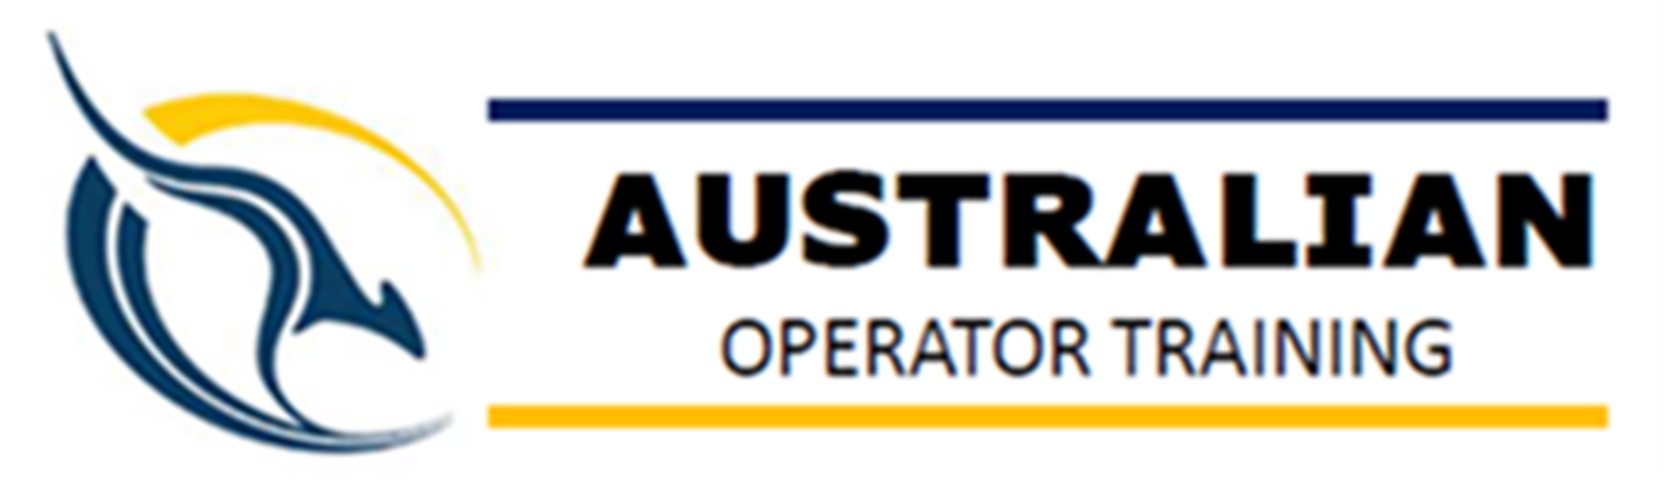 Australian Operator Training